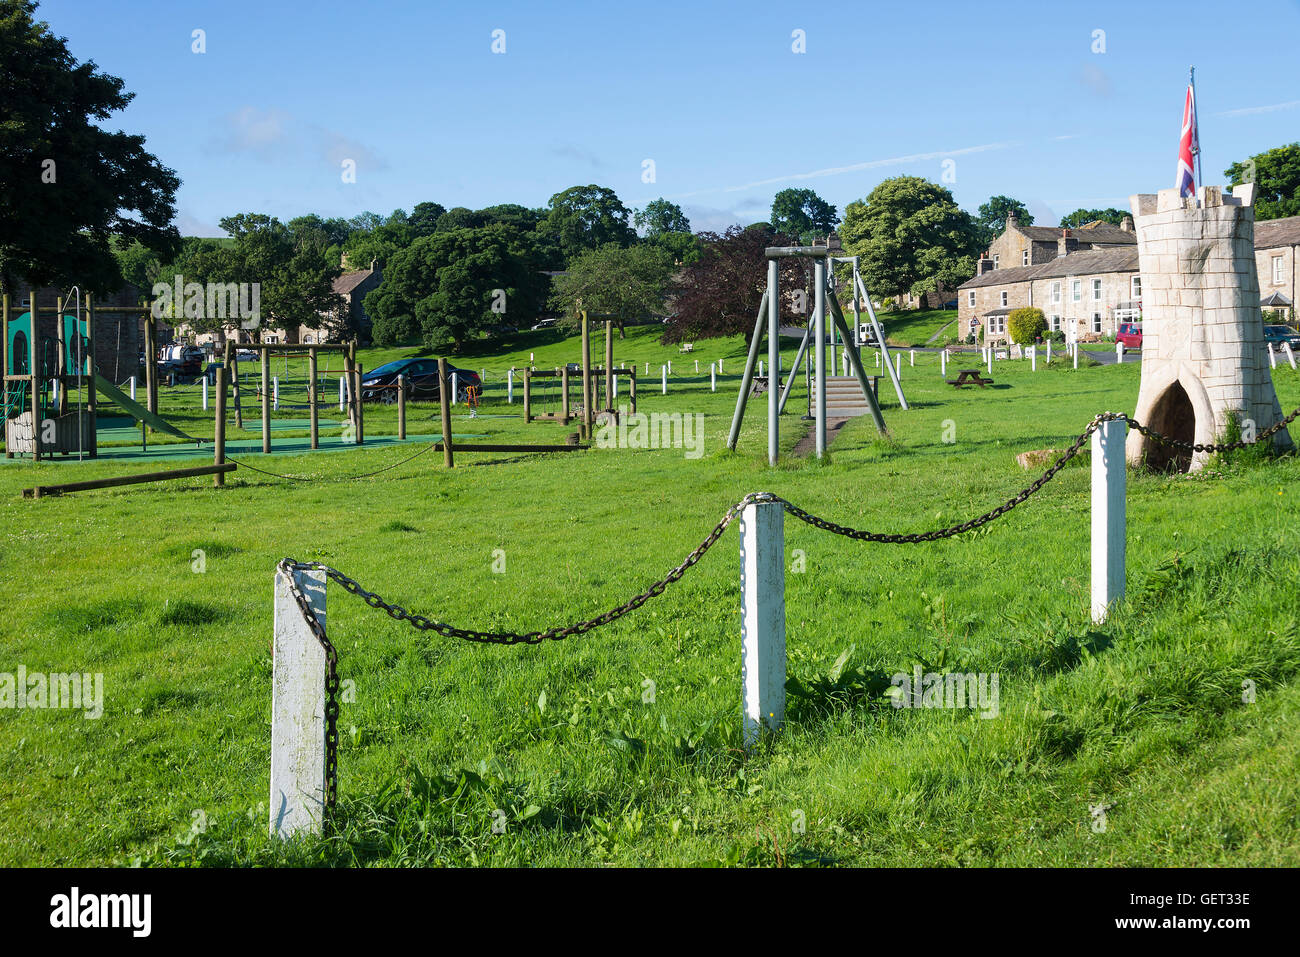 Childrens Playground on the Village Green in Bainbridge Yorkshire Dales National Park England United Kingdom UK Stock Photo